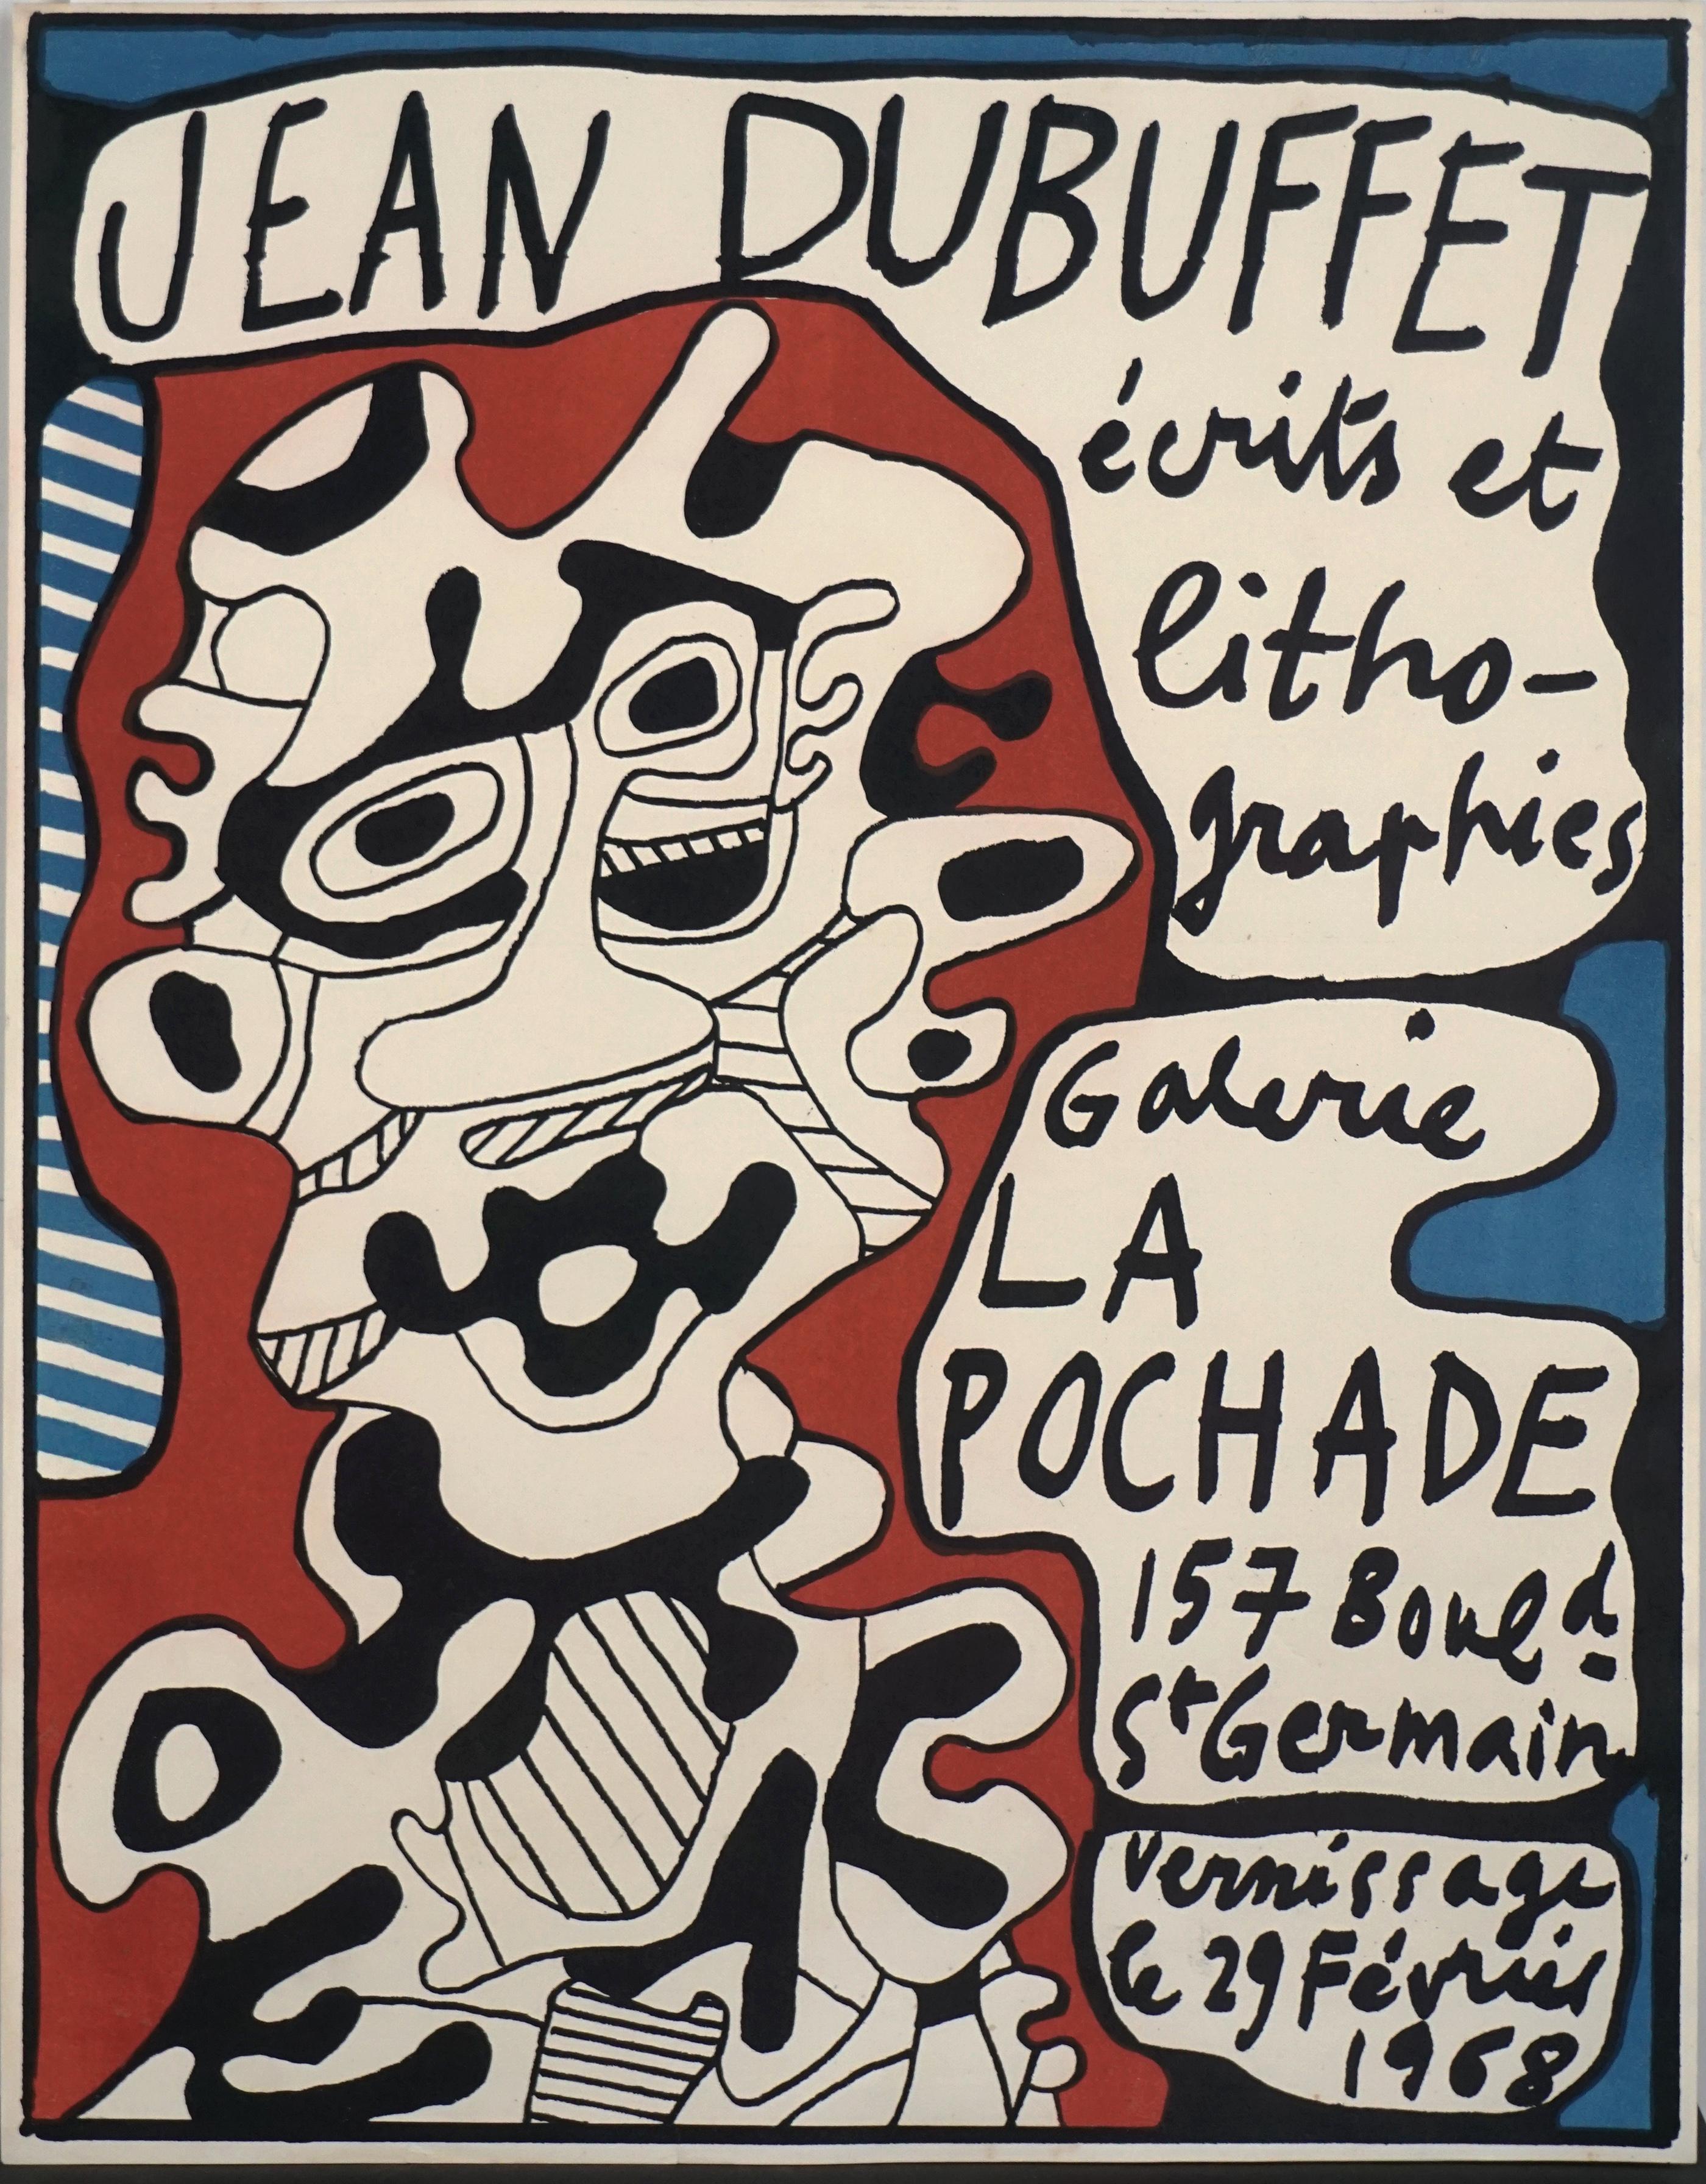 Jean Dubuffet Abstract Print - 1968 Jean Duffet Ecrits et Lithographies - Galerie La Pochade 